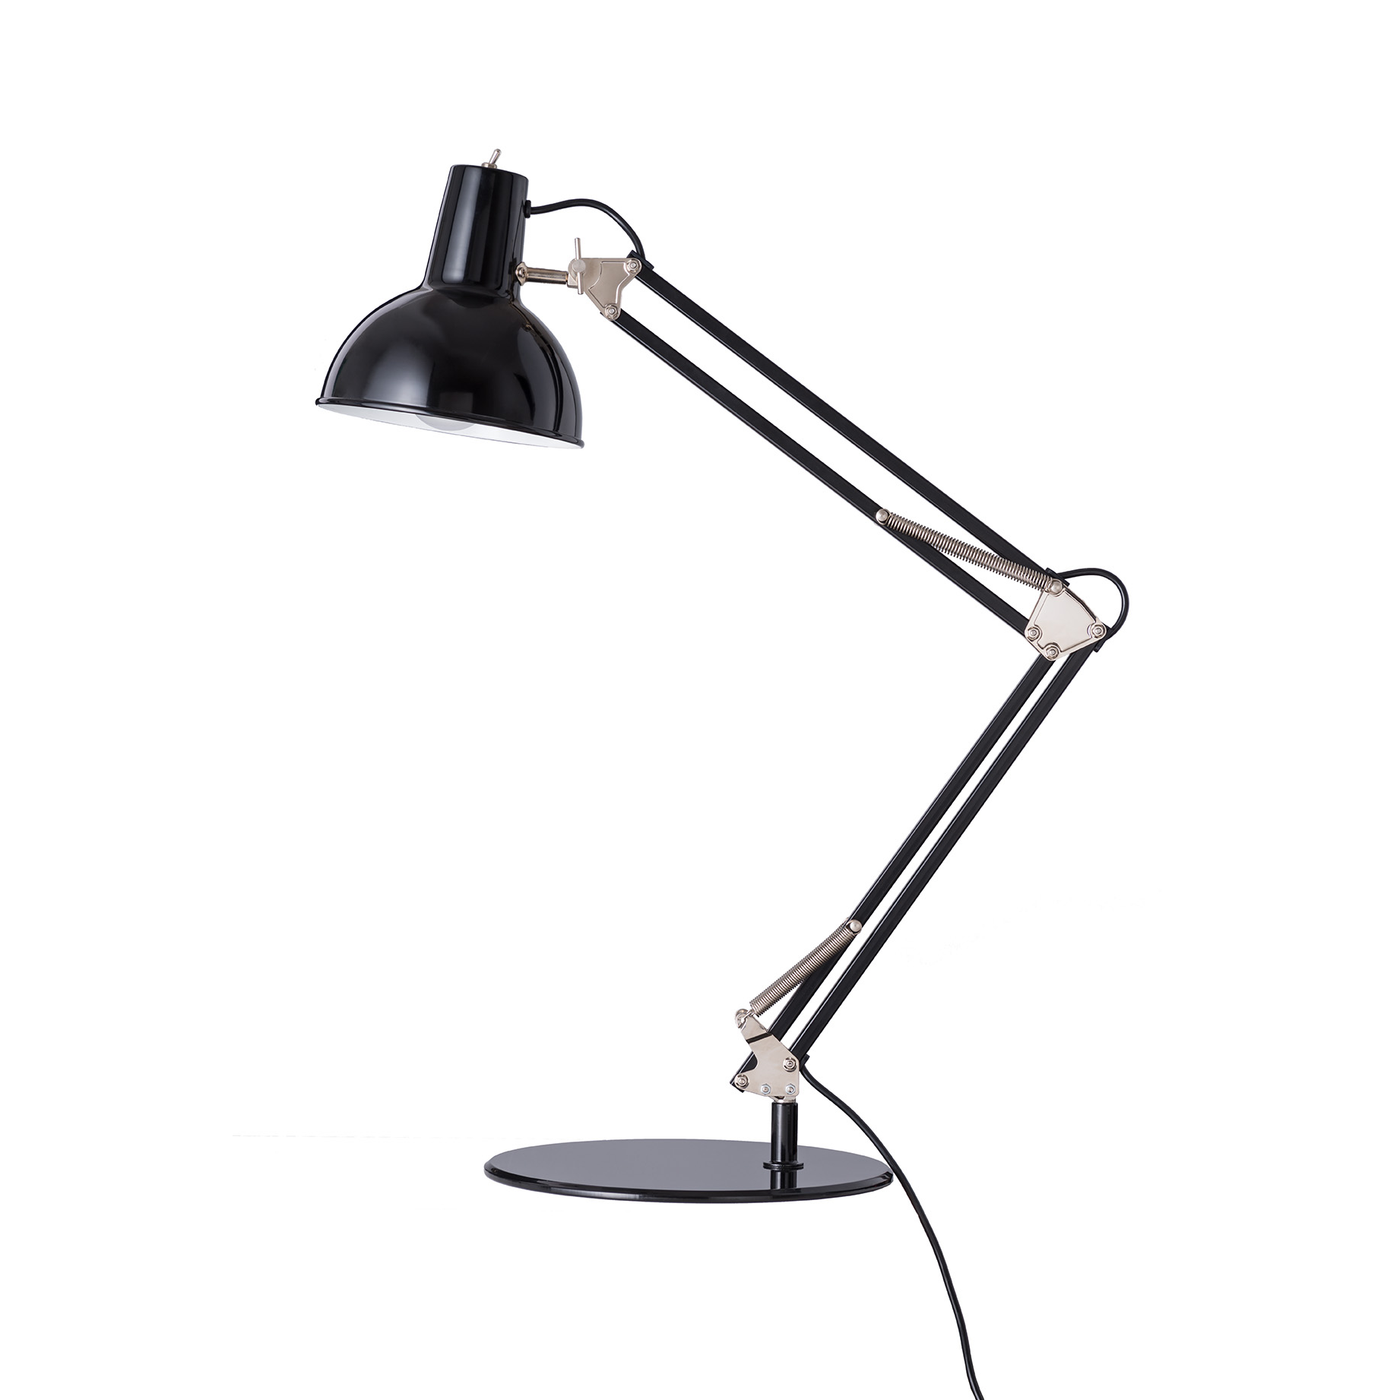 Spring Balanced Table Lamp by Midgard